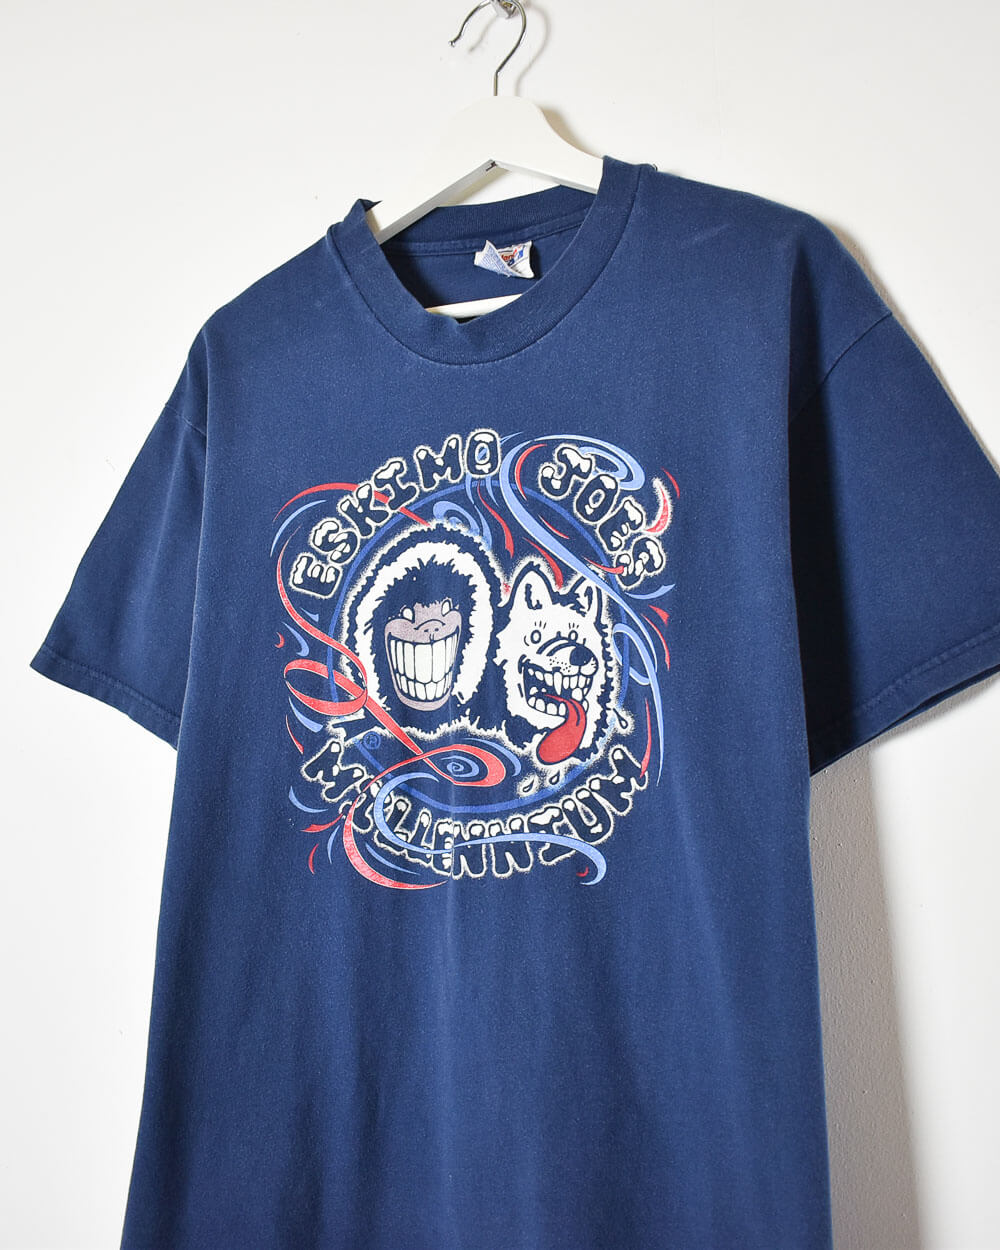 Navy Eskimo Joes Millennium T-Shirt - Medium